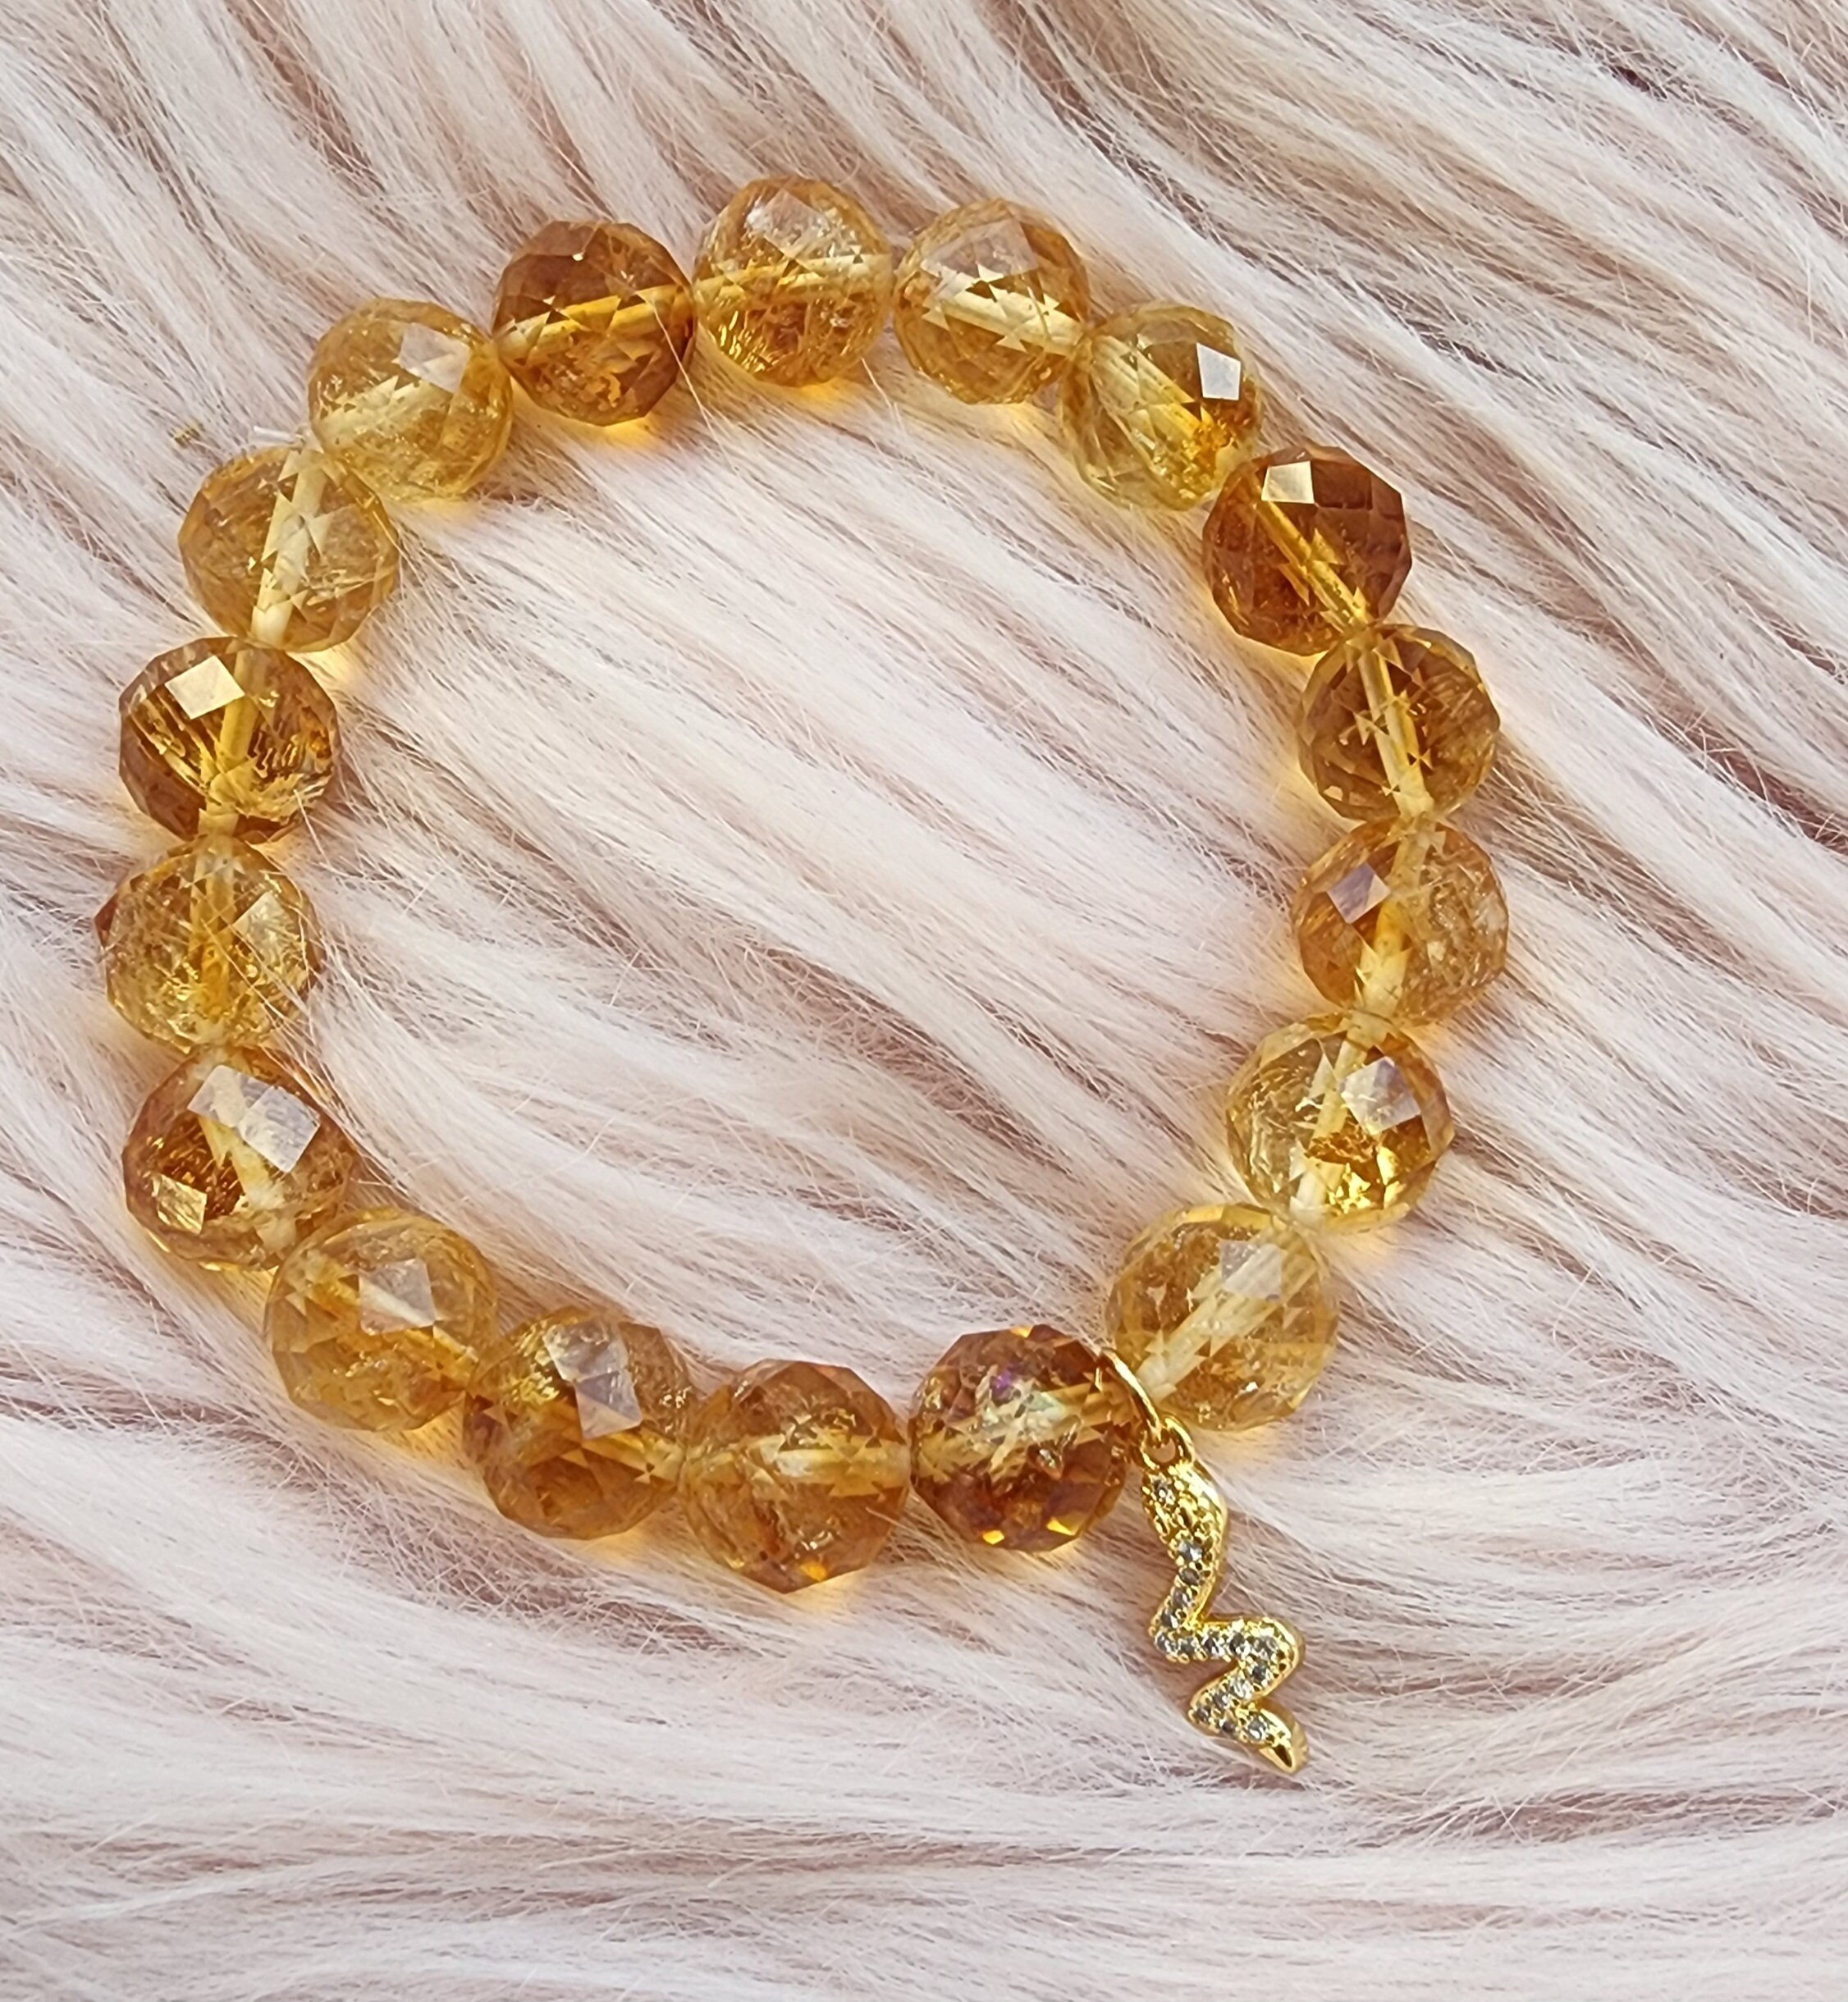 Citrine Bracelet with Lava beads - Momentum Feng Shui